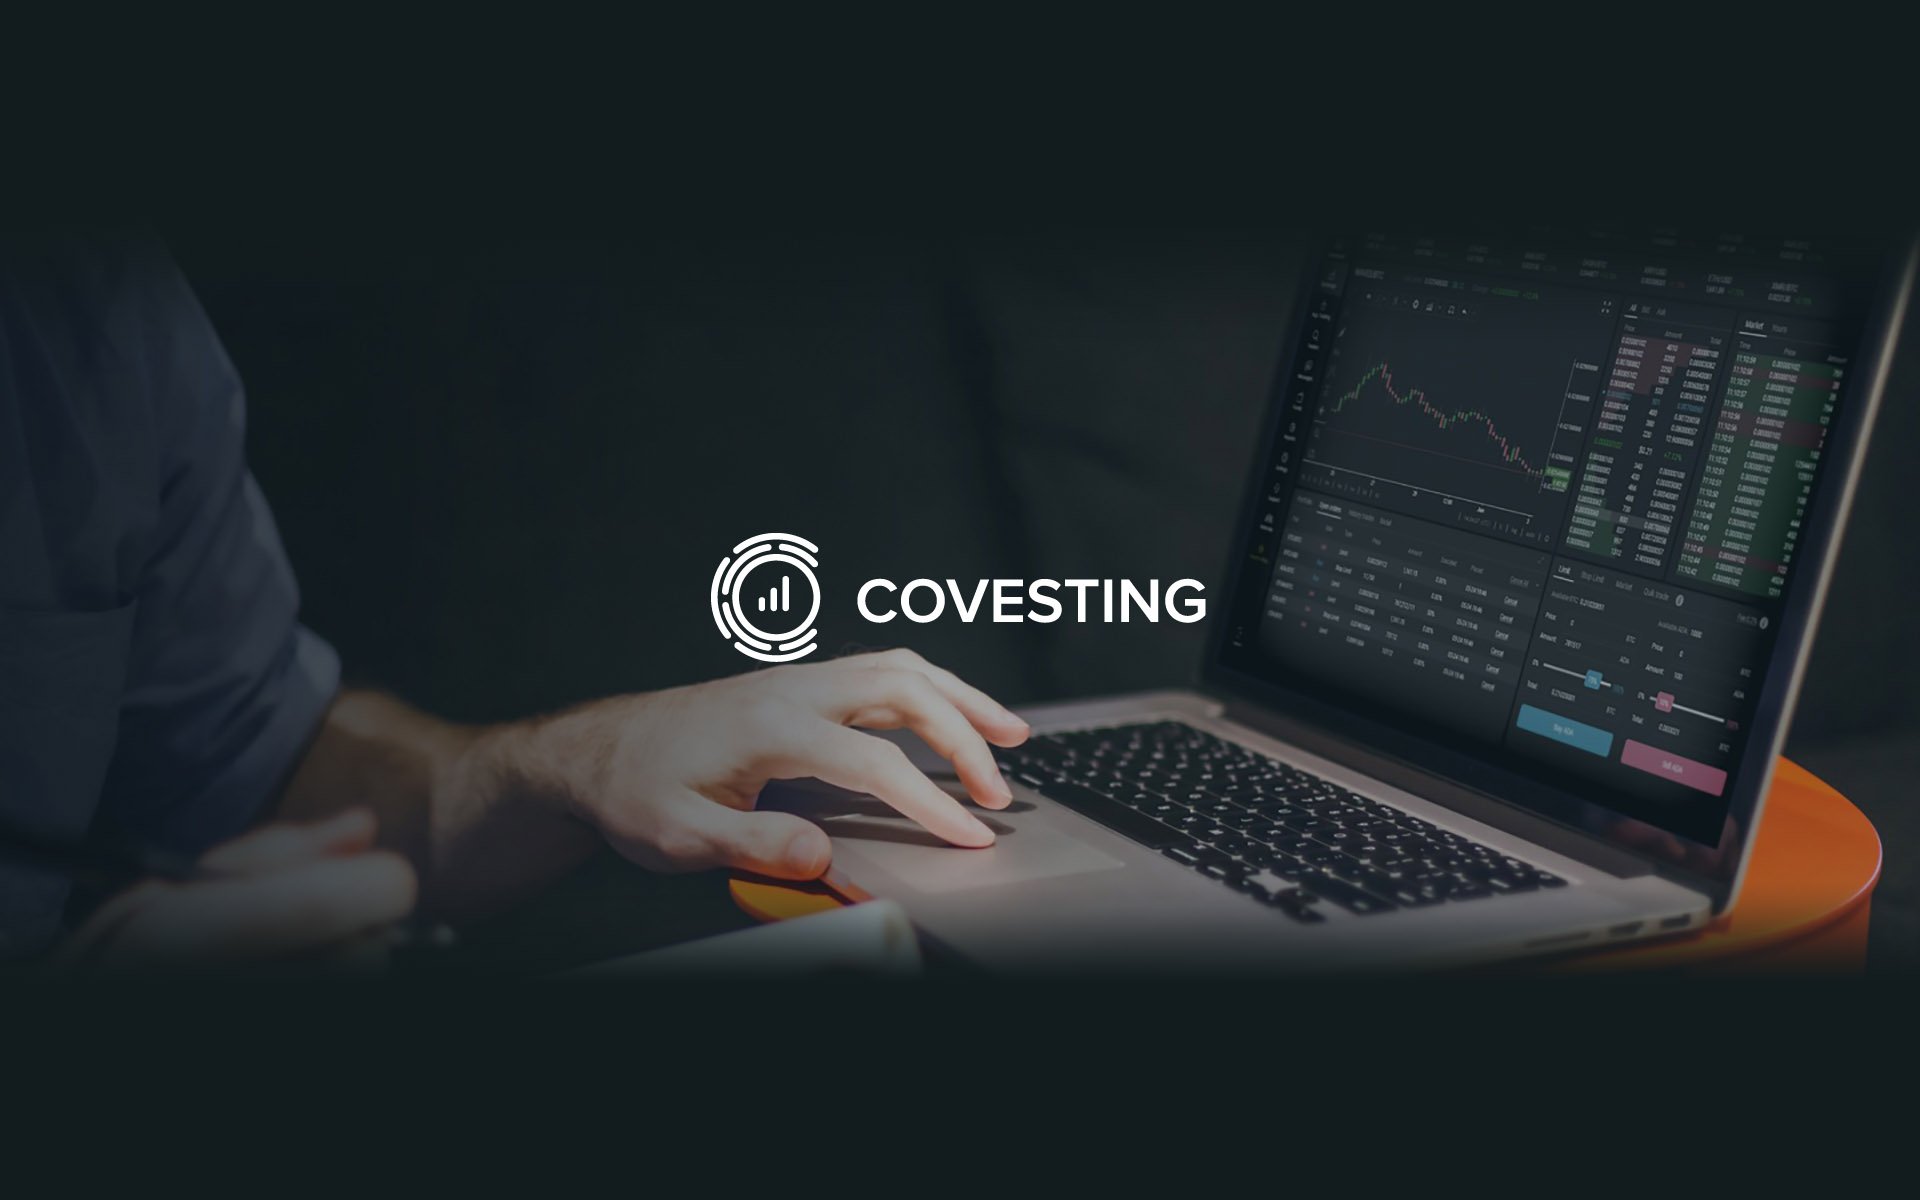 Covesting Invites Everyone to Test Their Platform